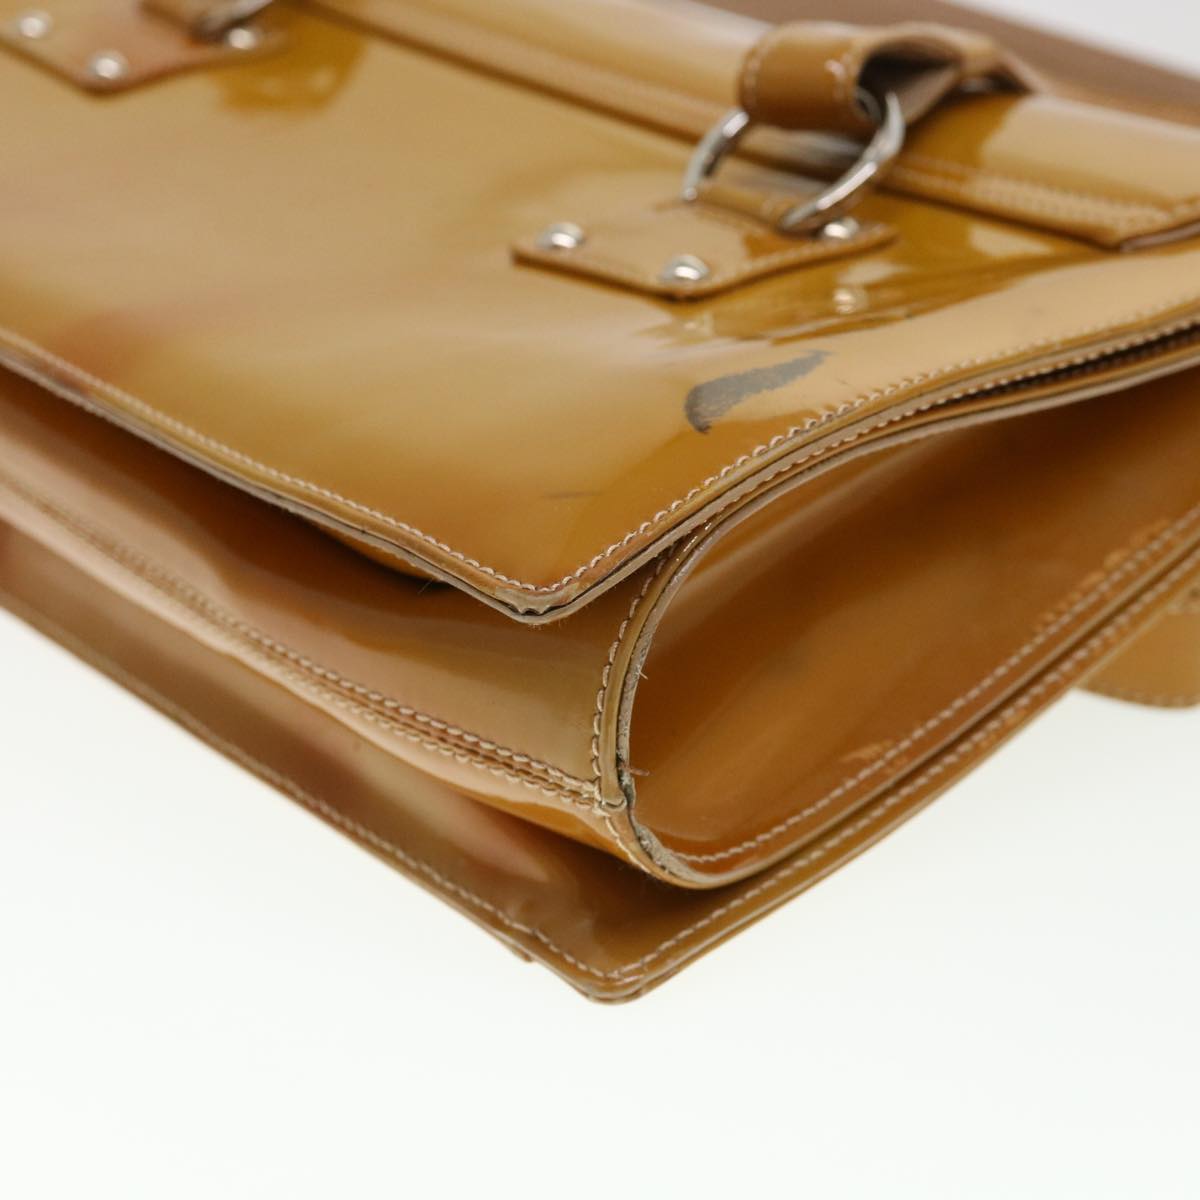 Salvatore Ferragamo Shoulder Bag Patent leather Yellow EO-21 6854 Auth cl440